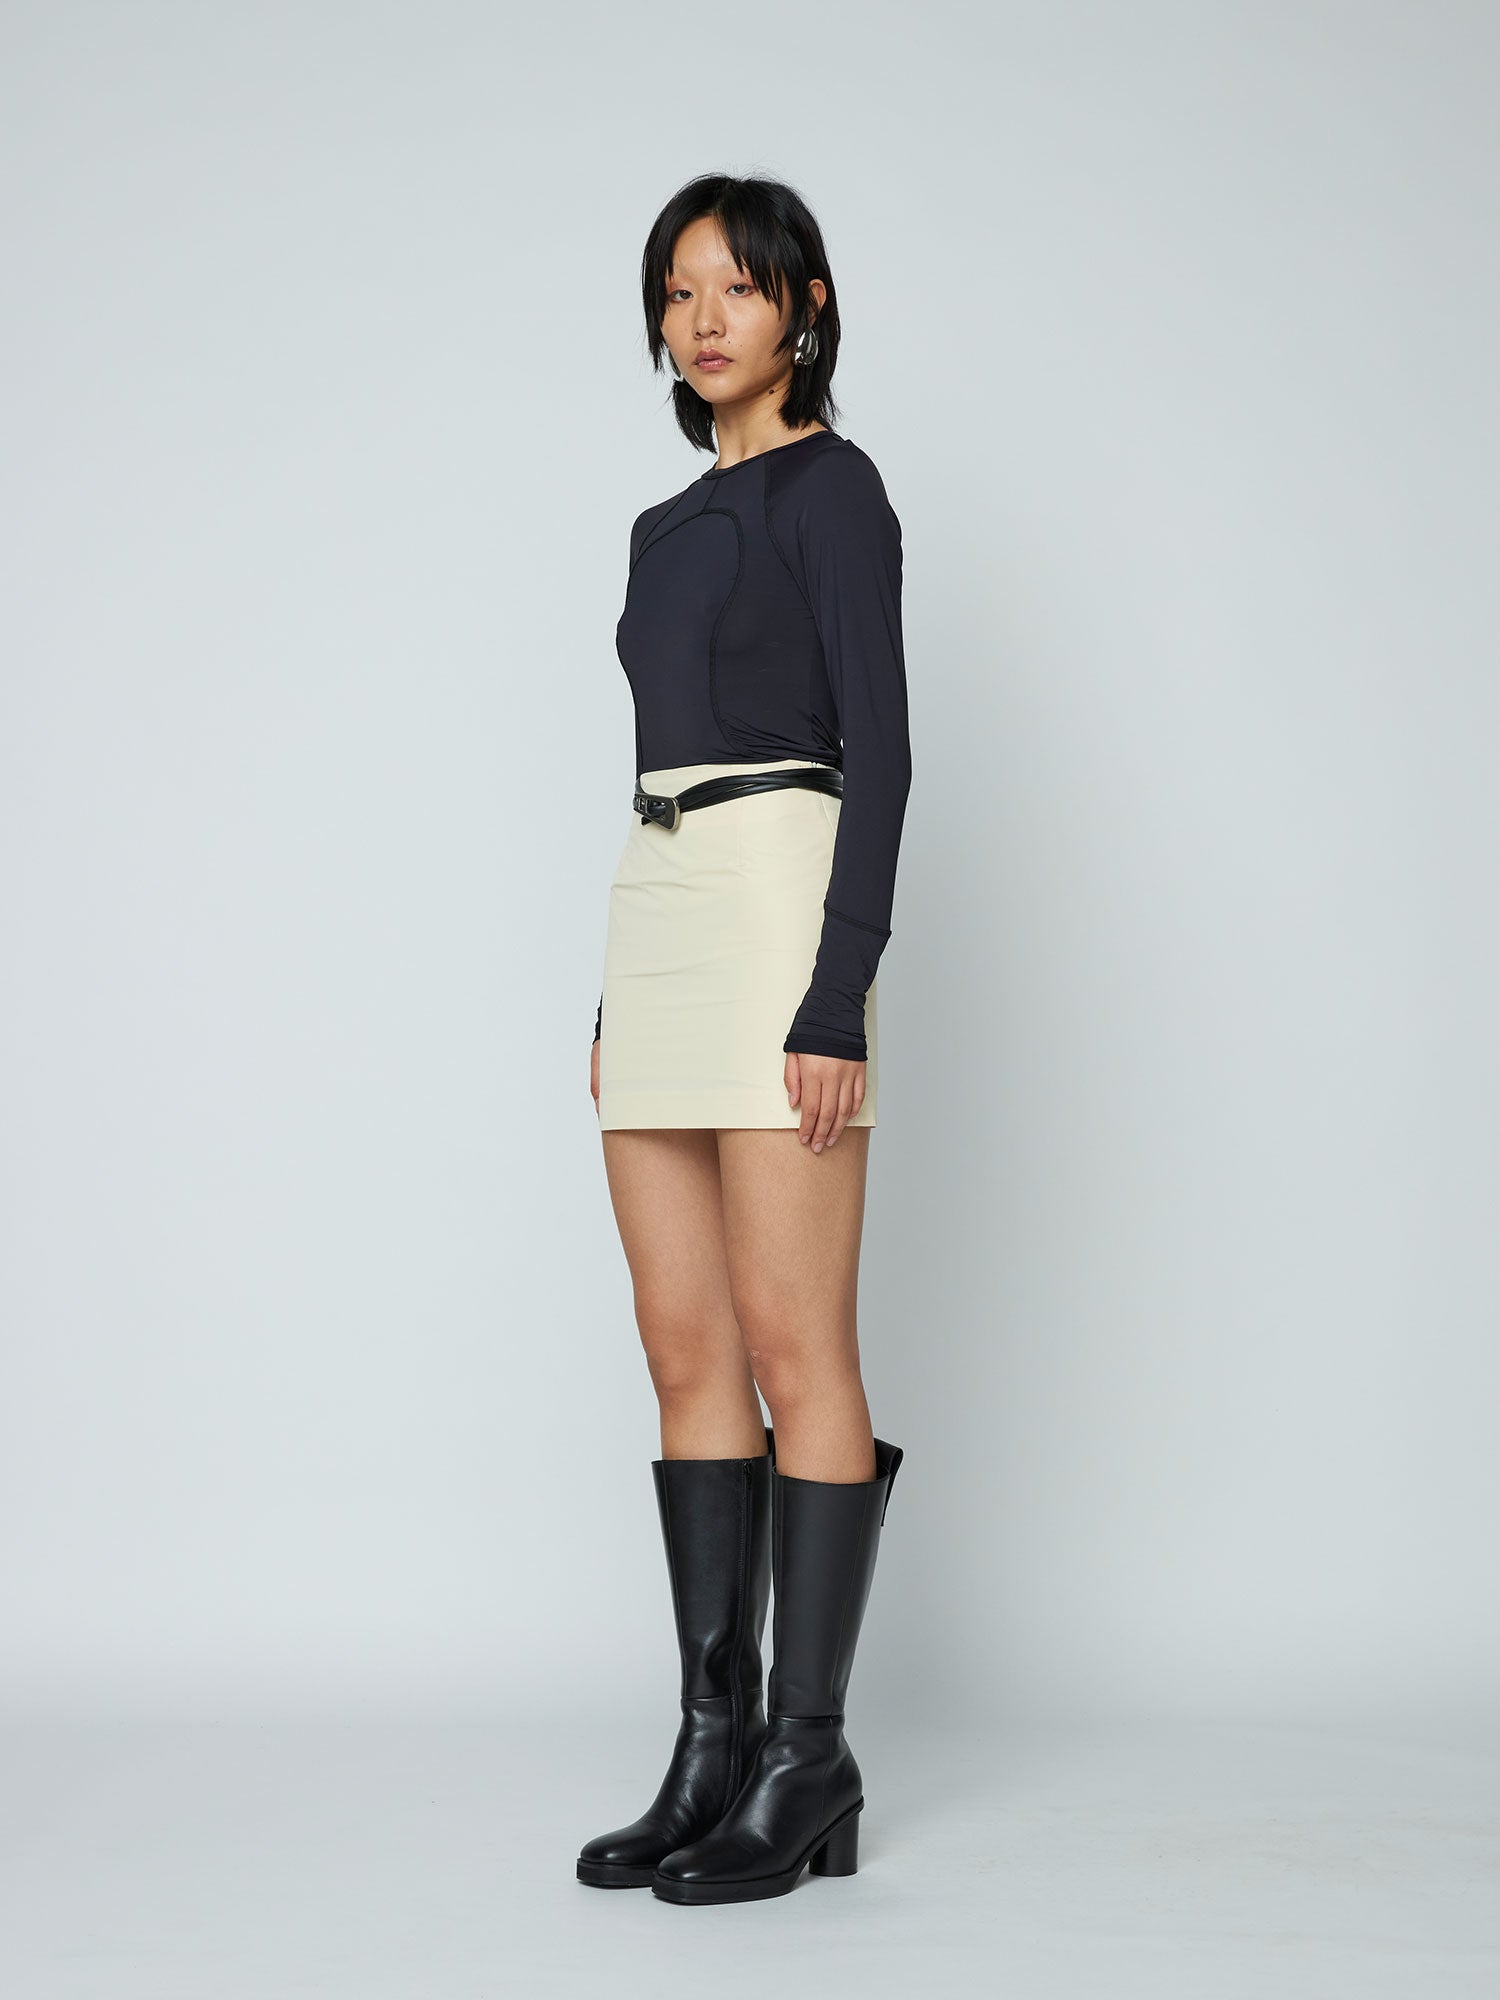 Wynn Hamlyn Sophia Mini Skirt in Bone available at The New Trend Australia.